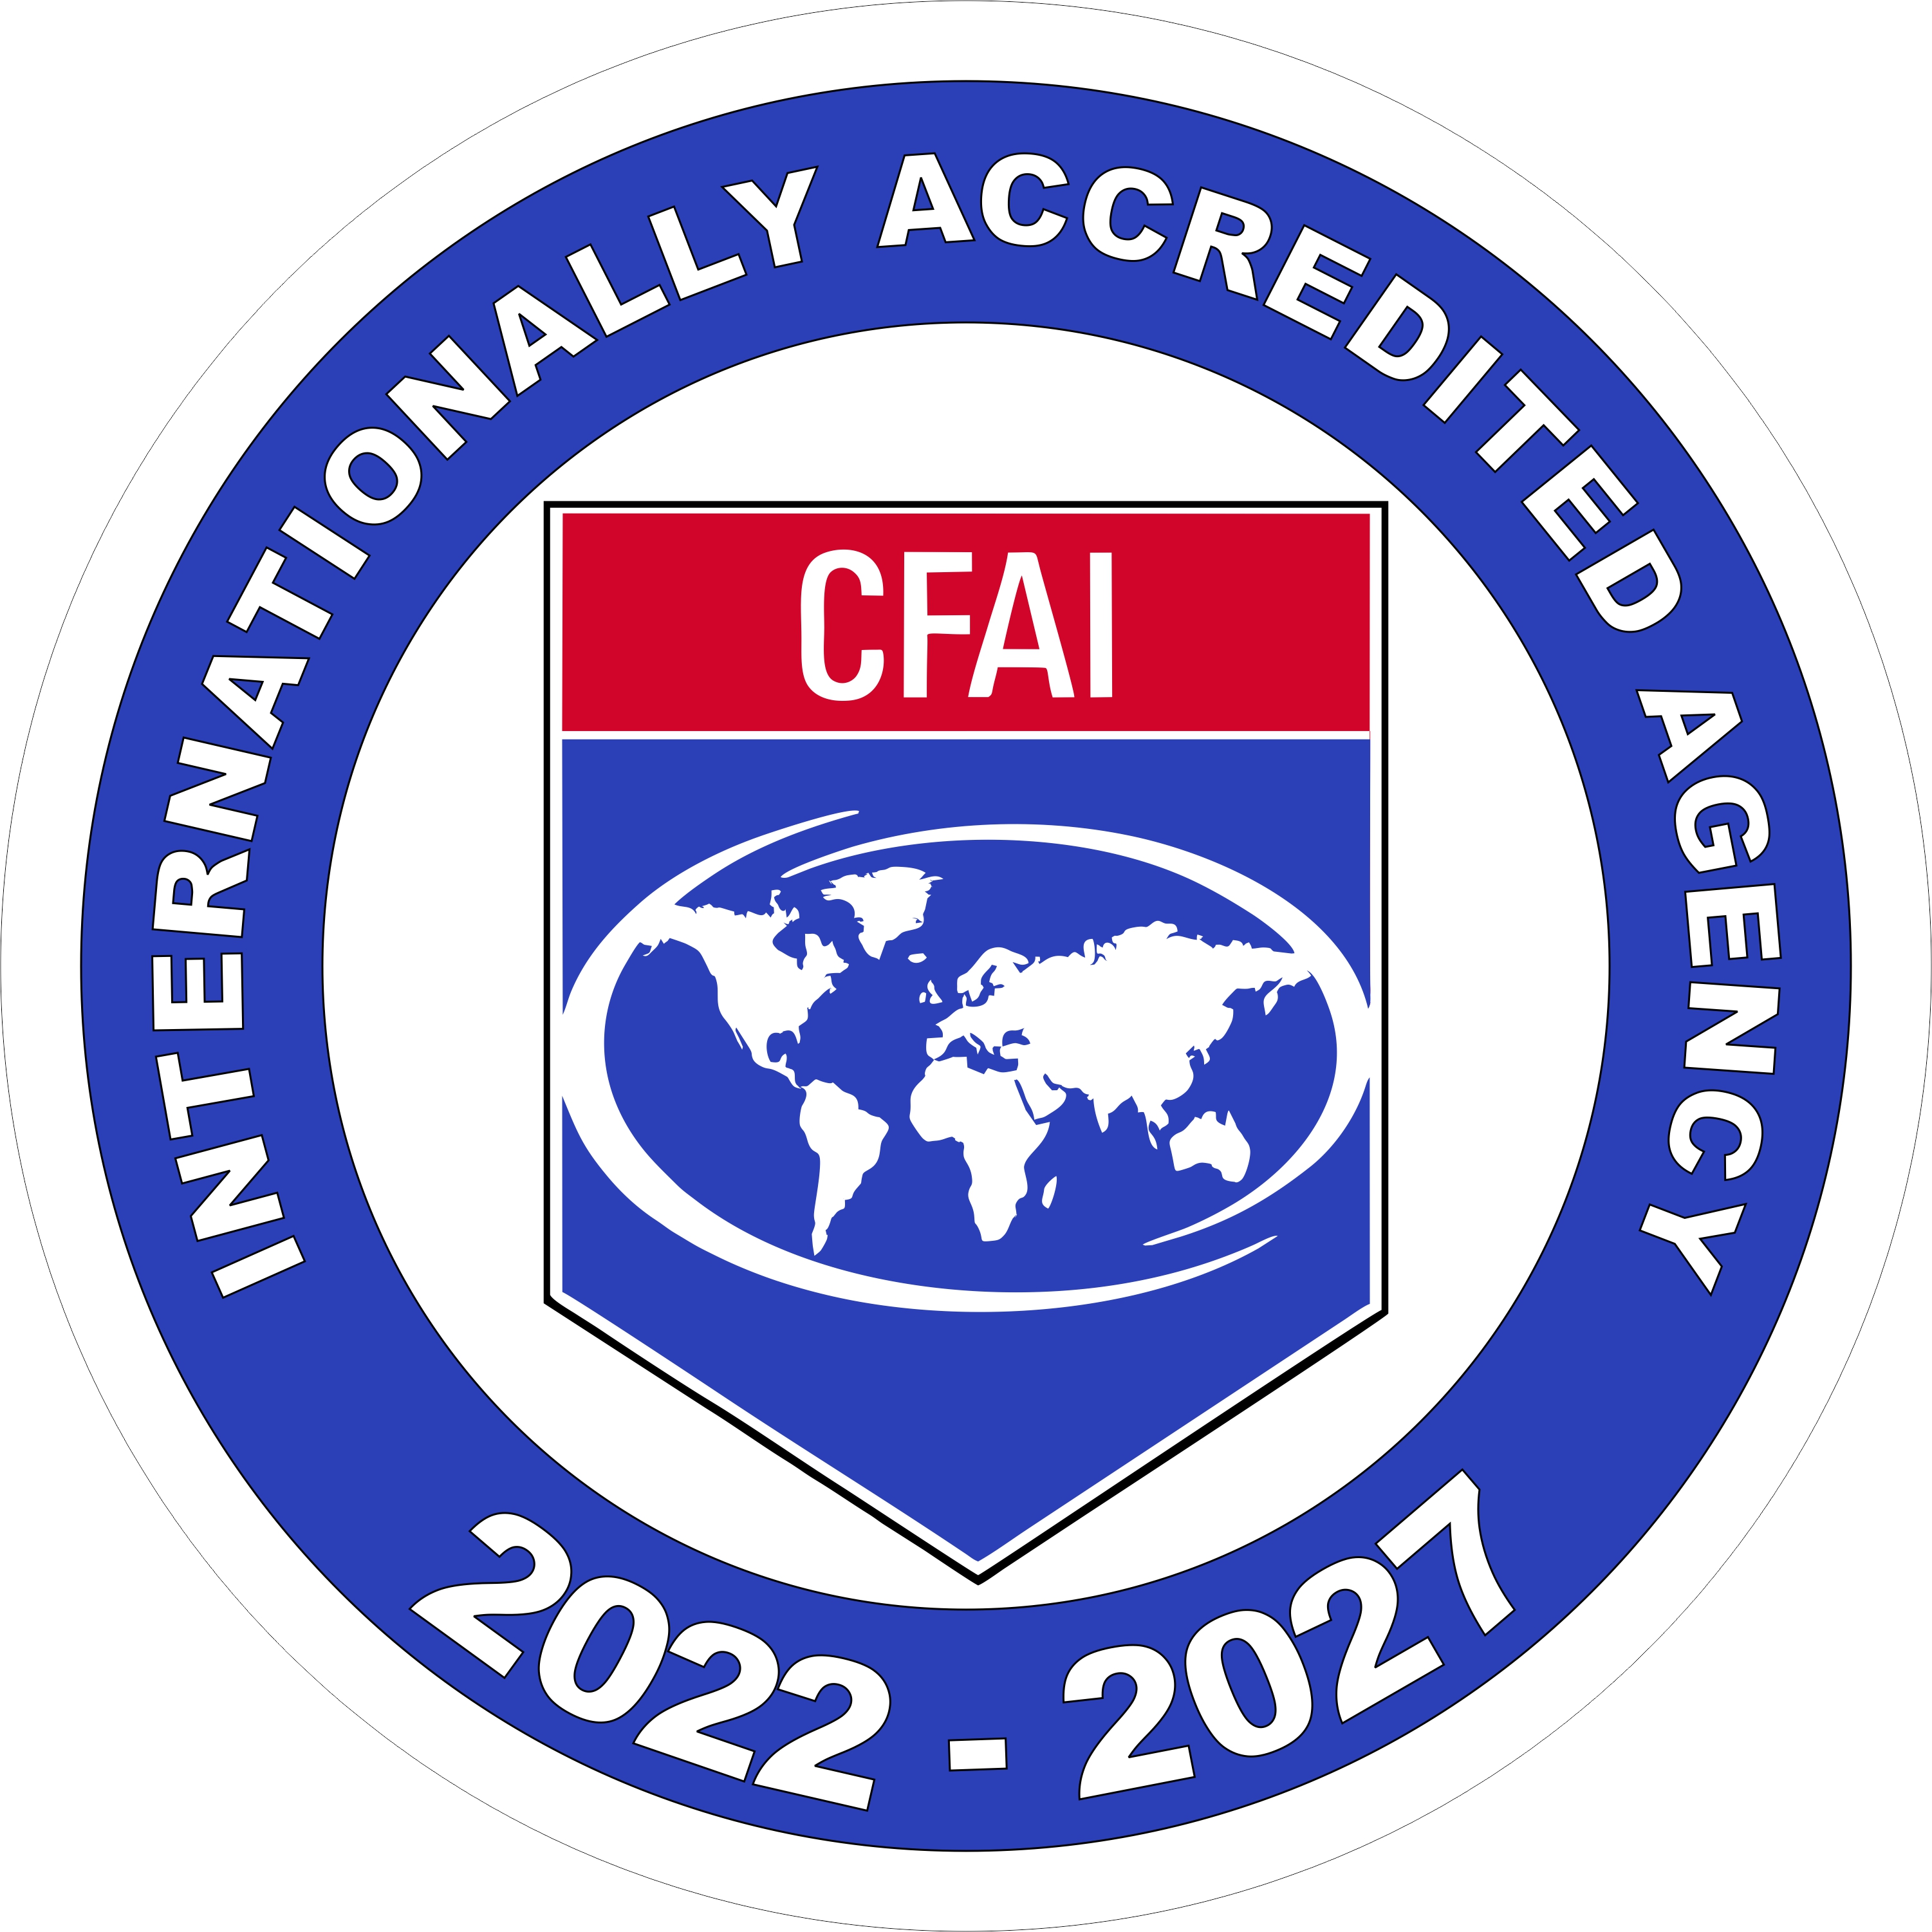 CFAI Internationally Accredited Agency 2022 - 2027